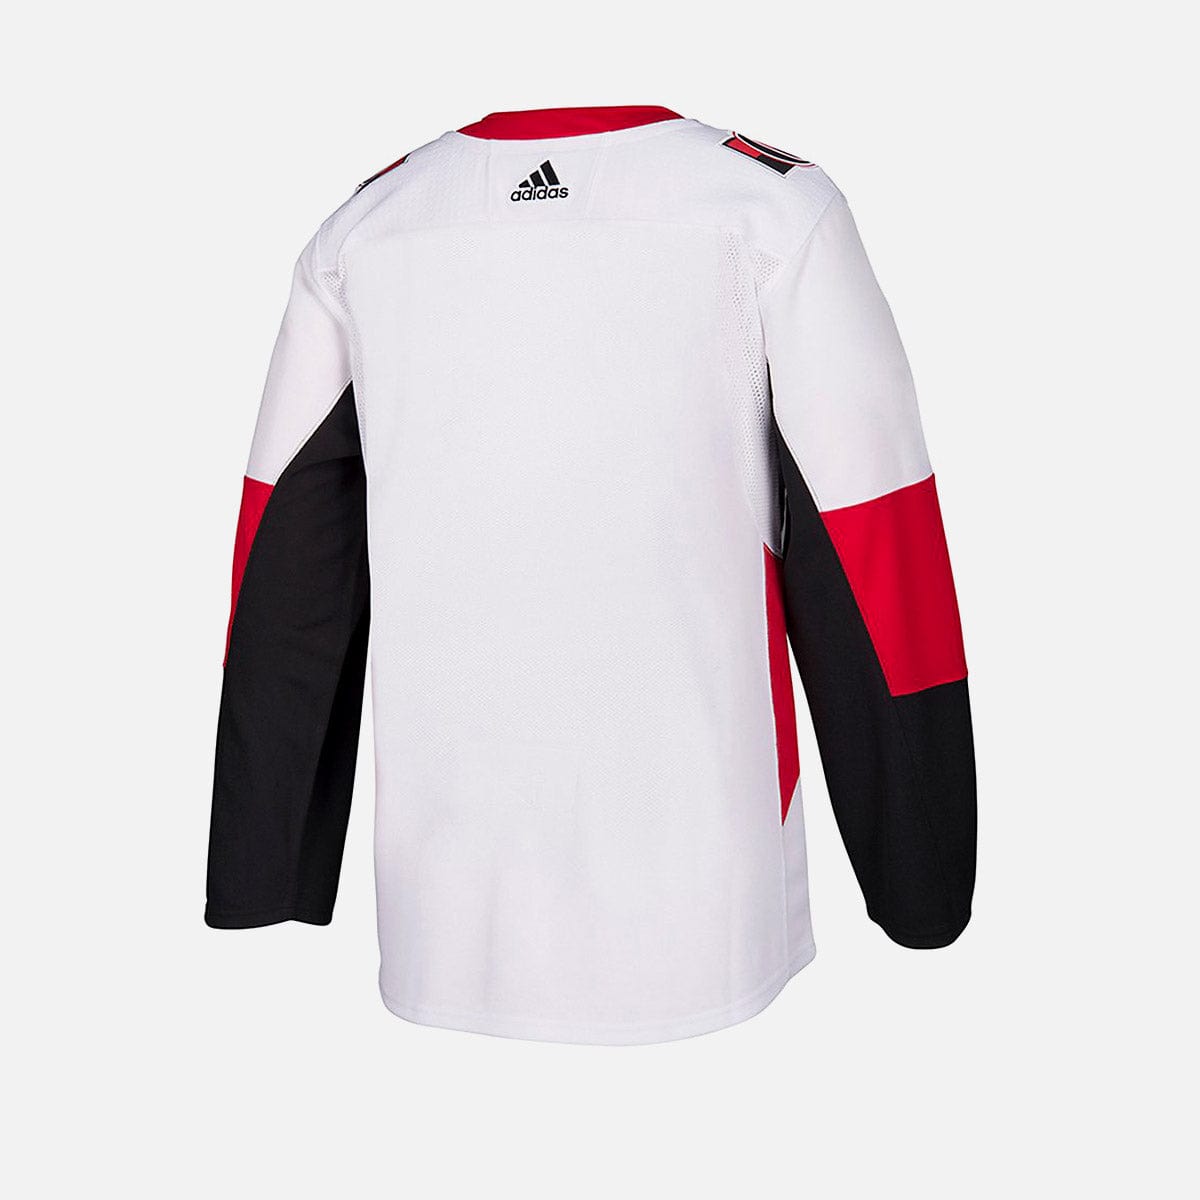 Ottawa Senators Away Adidas Authentic Senior Jersey (2019)